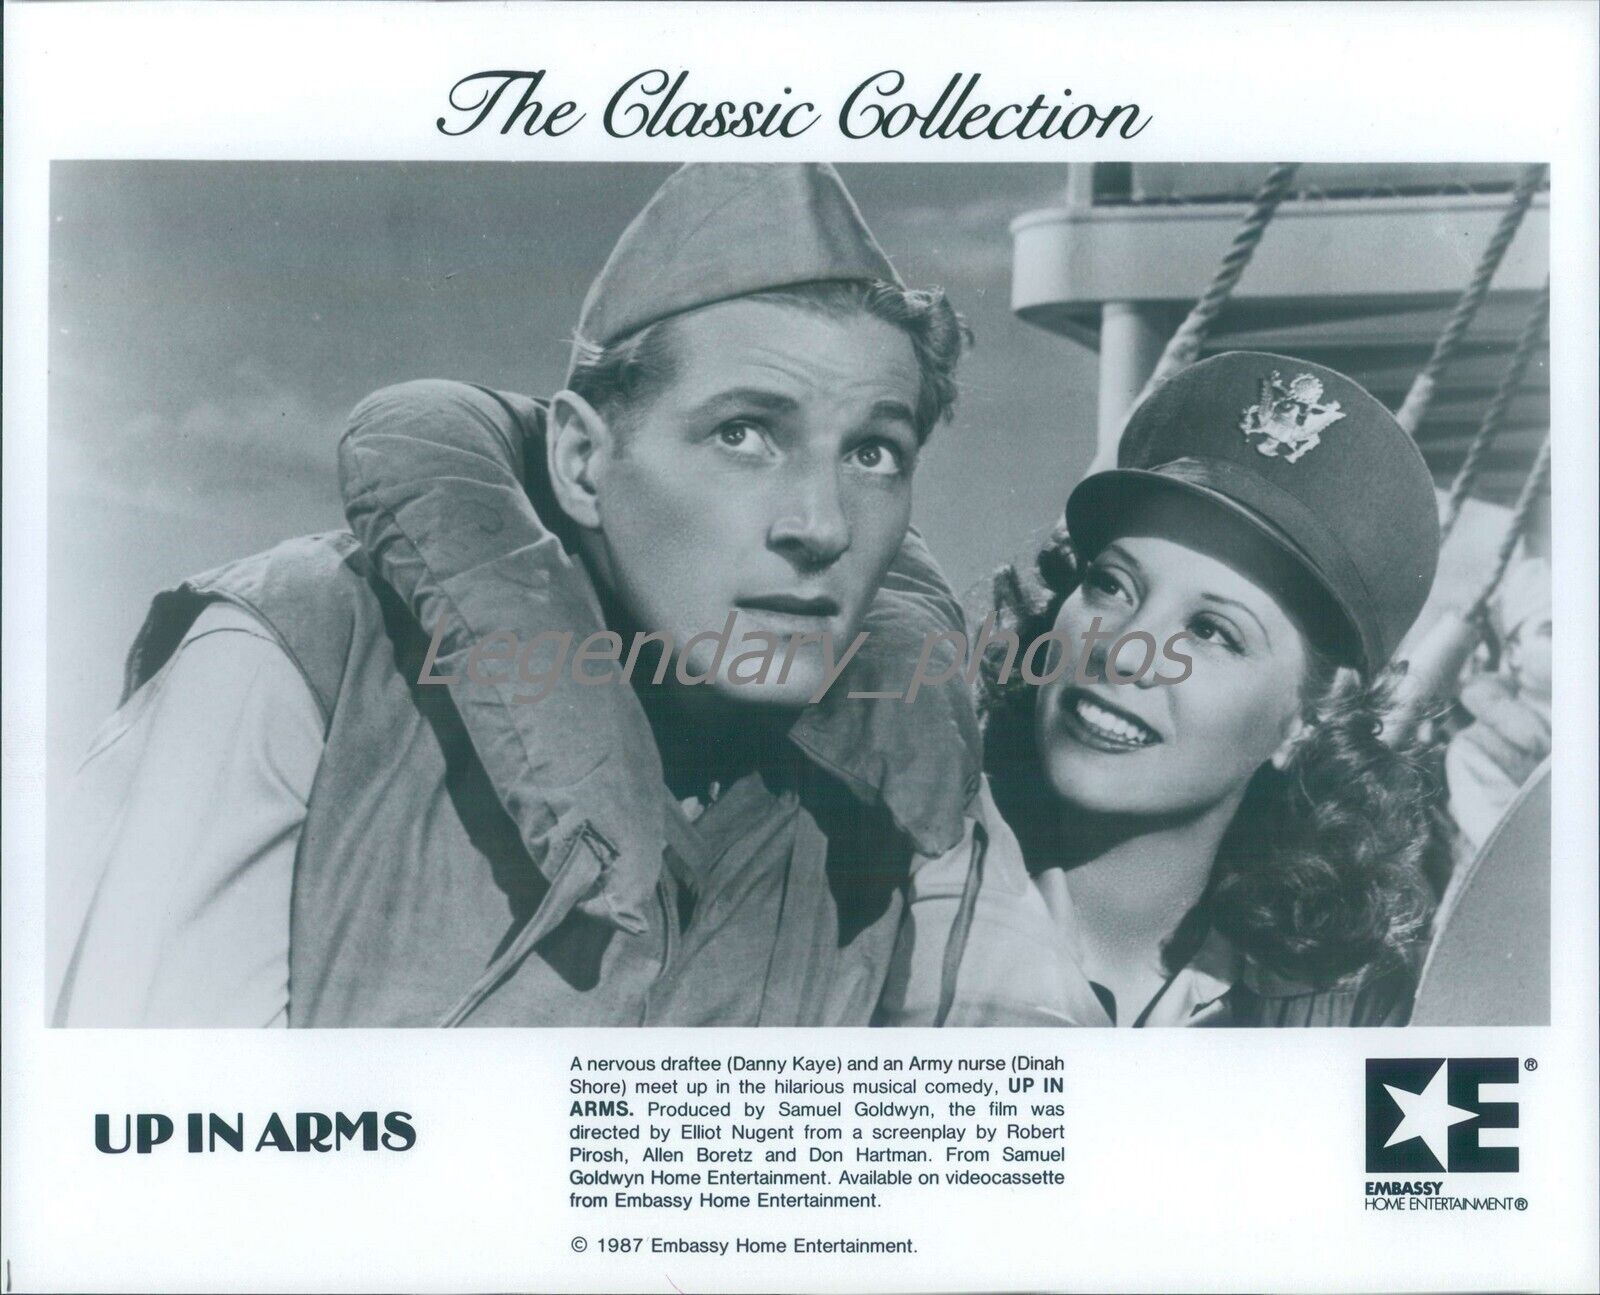 1944 Actors Danny Kaye Dinah Shore in Up in Arms Original News Service Photo